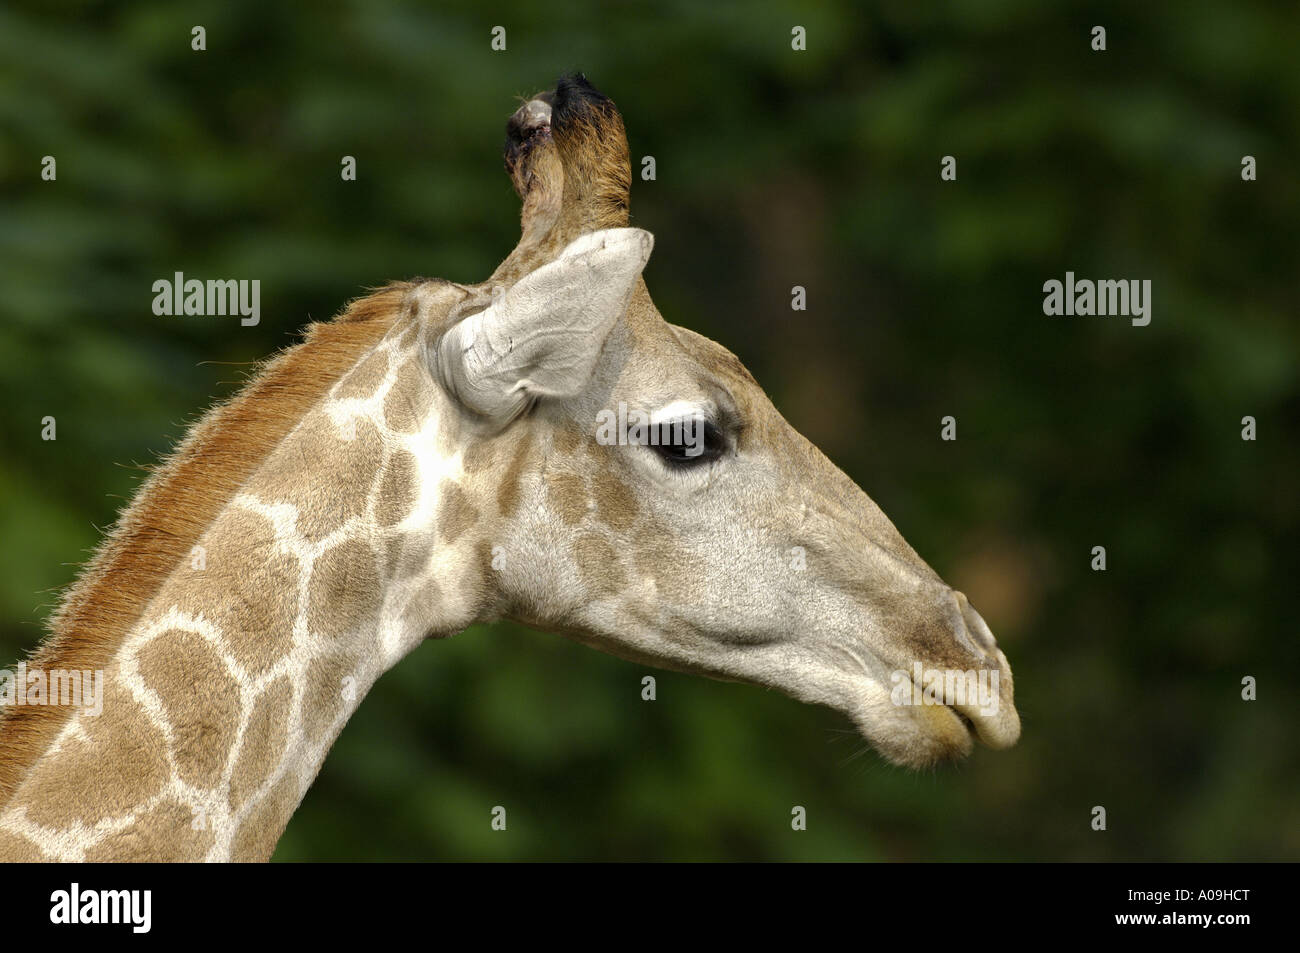 smoky giraffe (Giraffa camelopardalis angolensis), portrait Stock Photo